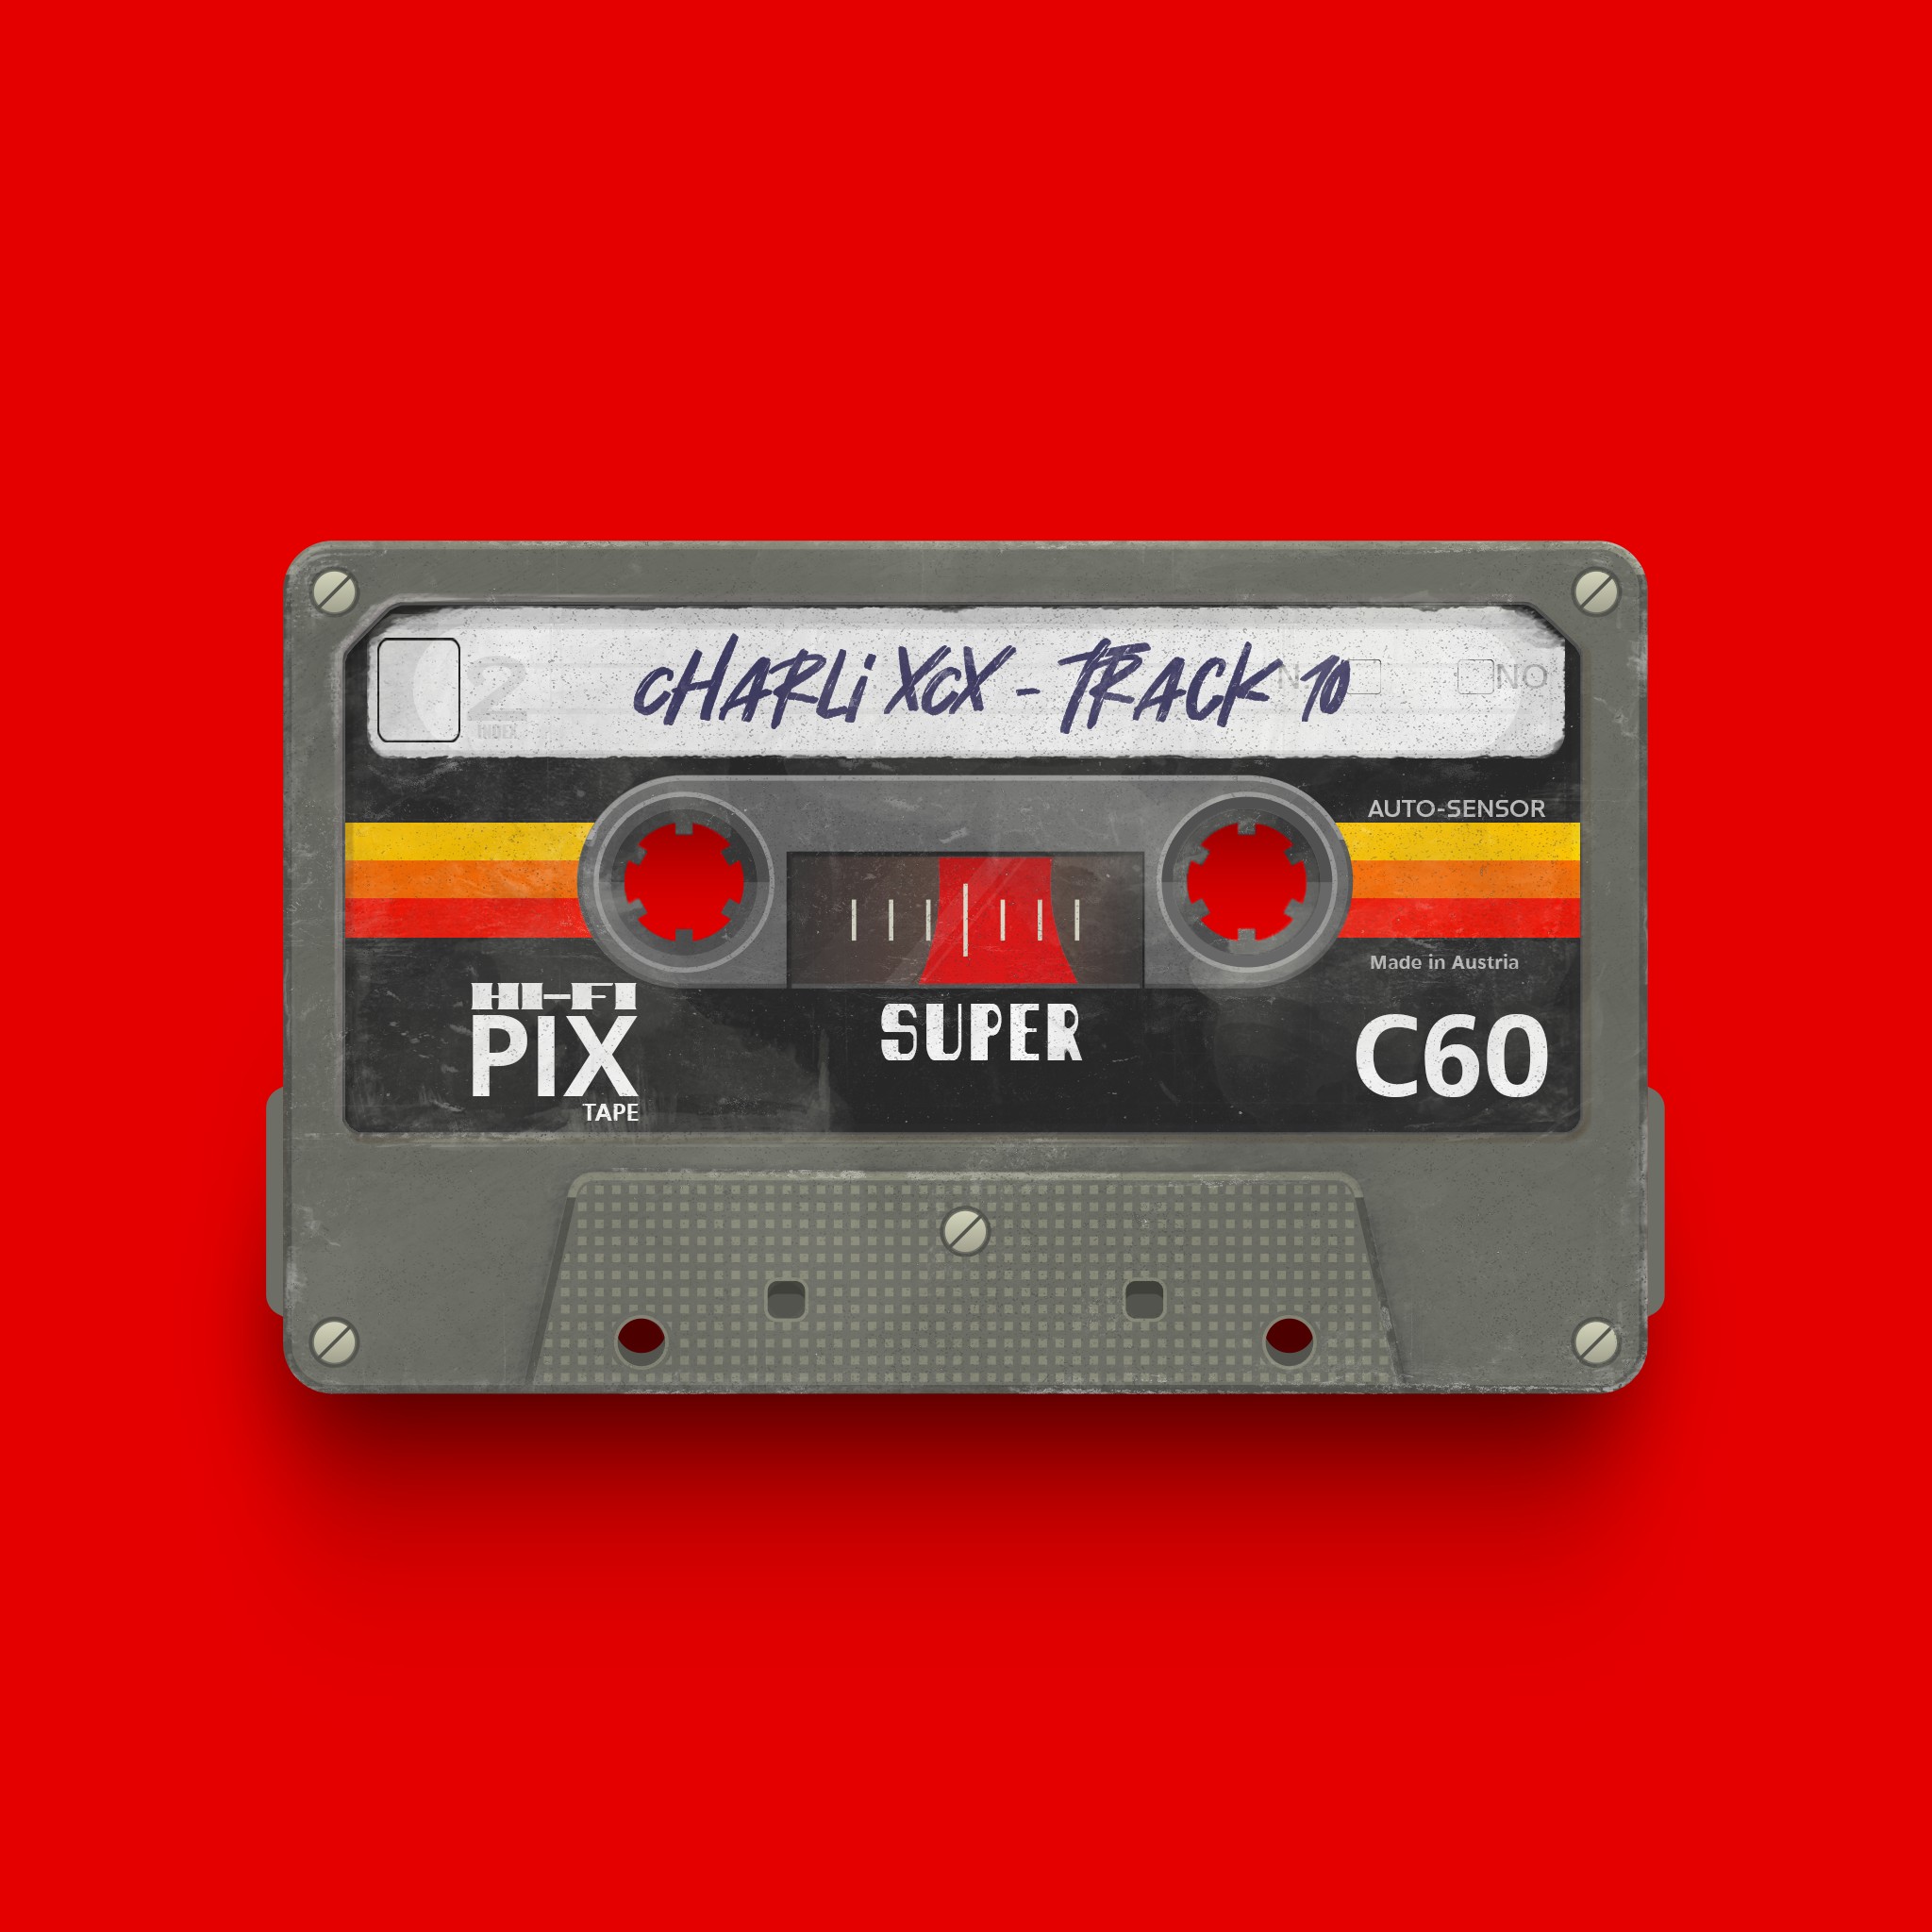 PixTape #4 | Charli XCX - Track 10